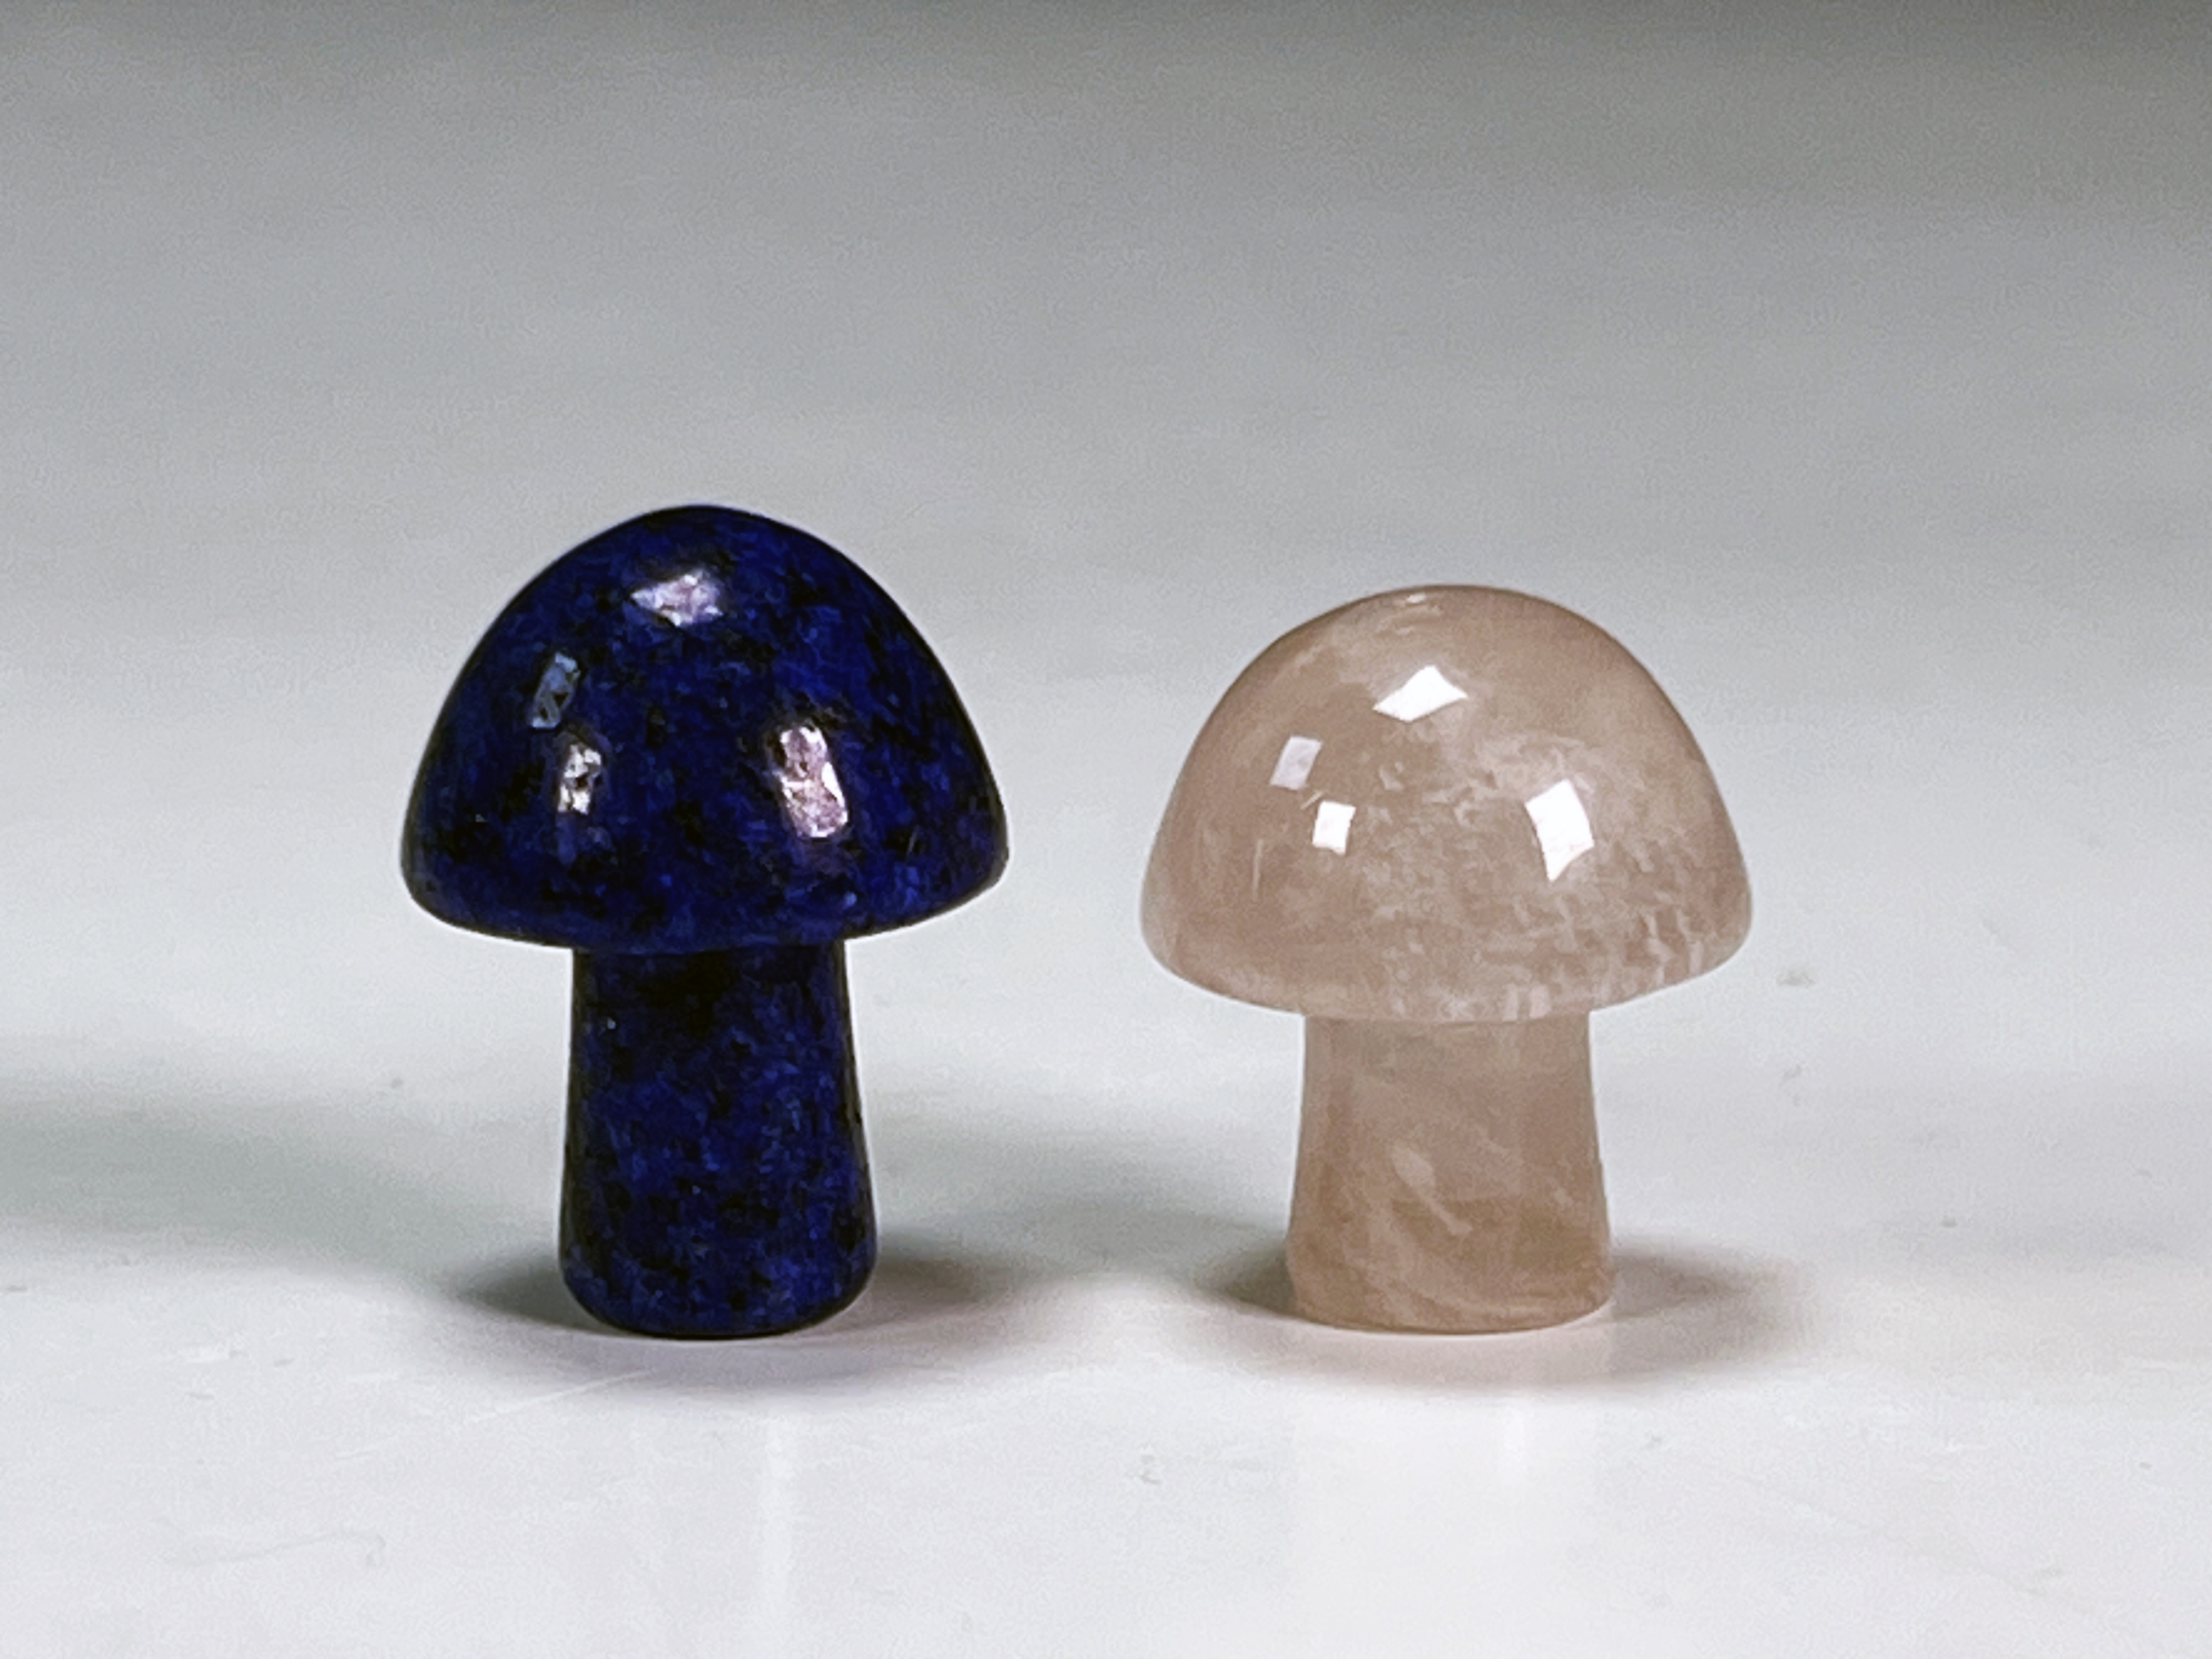 Two Stone Mushrooms image 1